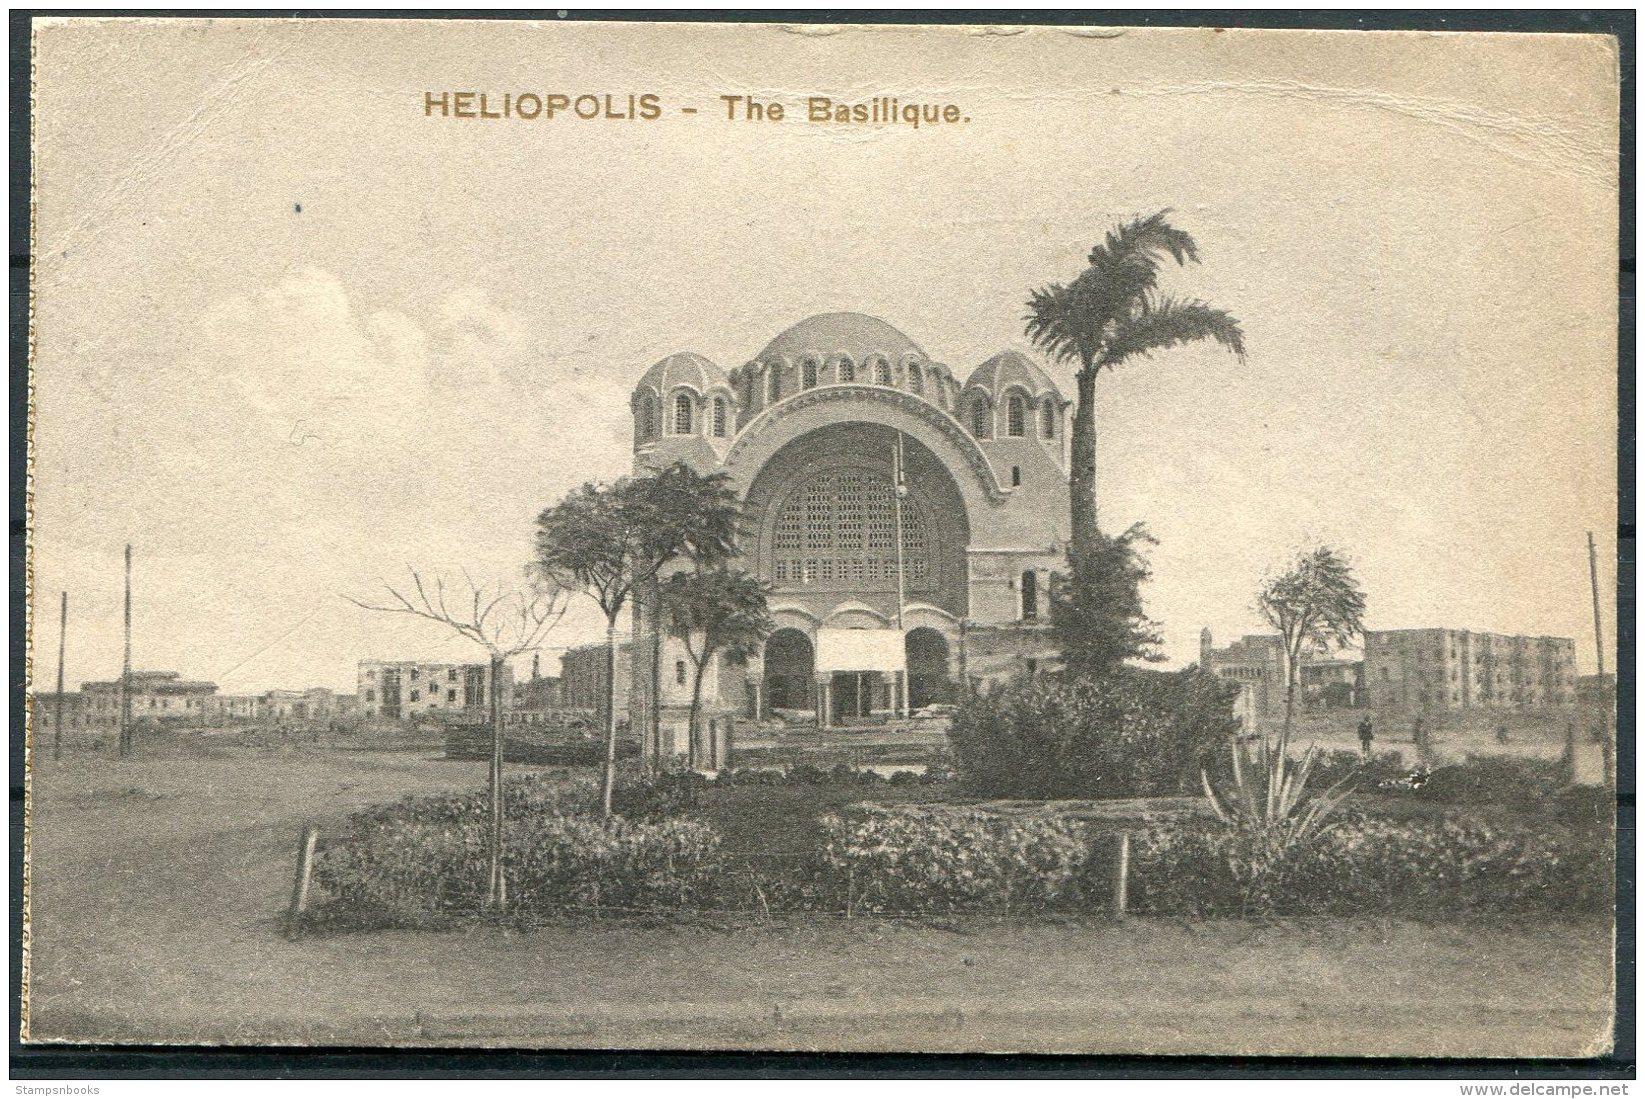 1919 Palestine Heliopolis Postcard FPO, F.P.O. Field Post Office - Bramley, Leeds, England - Palestine